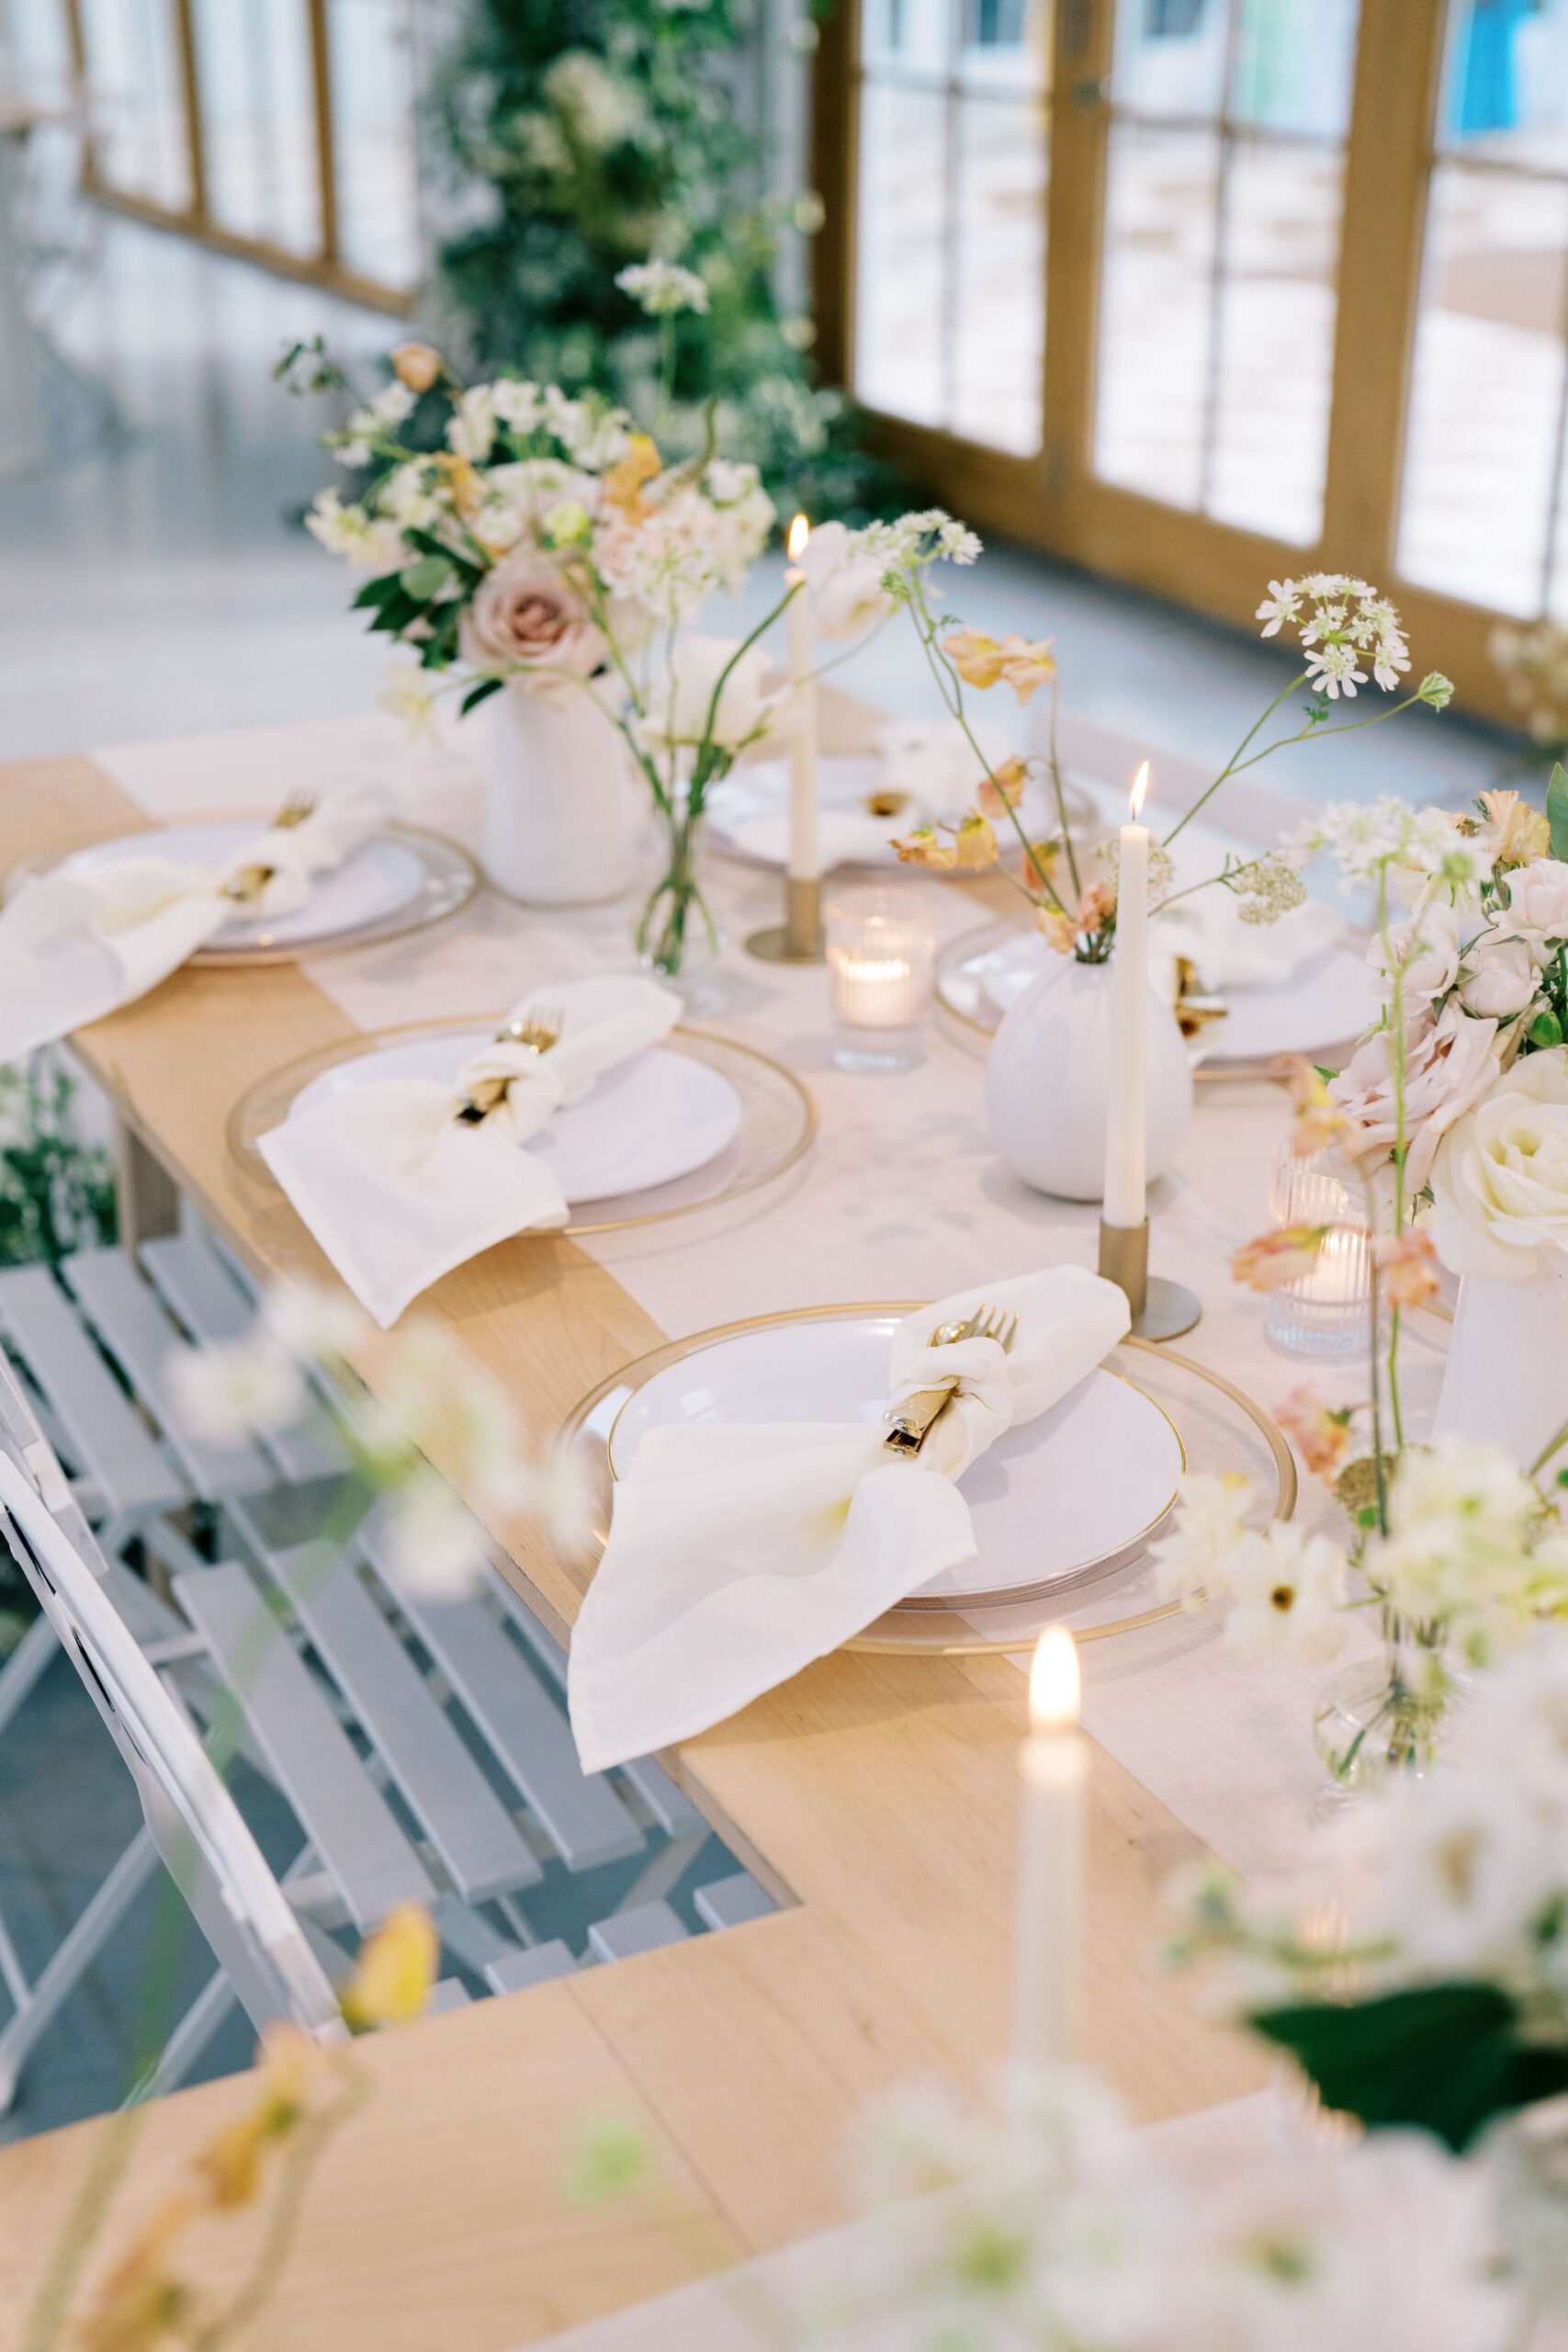 Dreamy wedding head table place settings